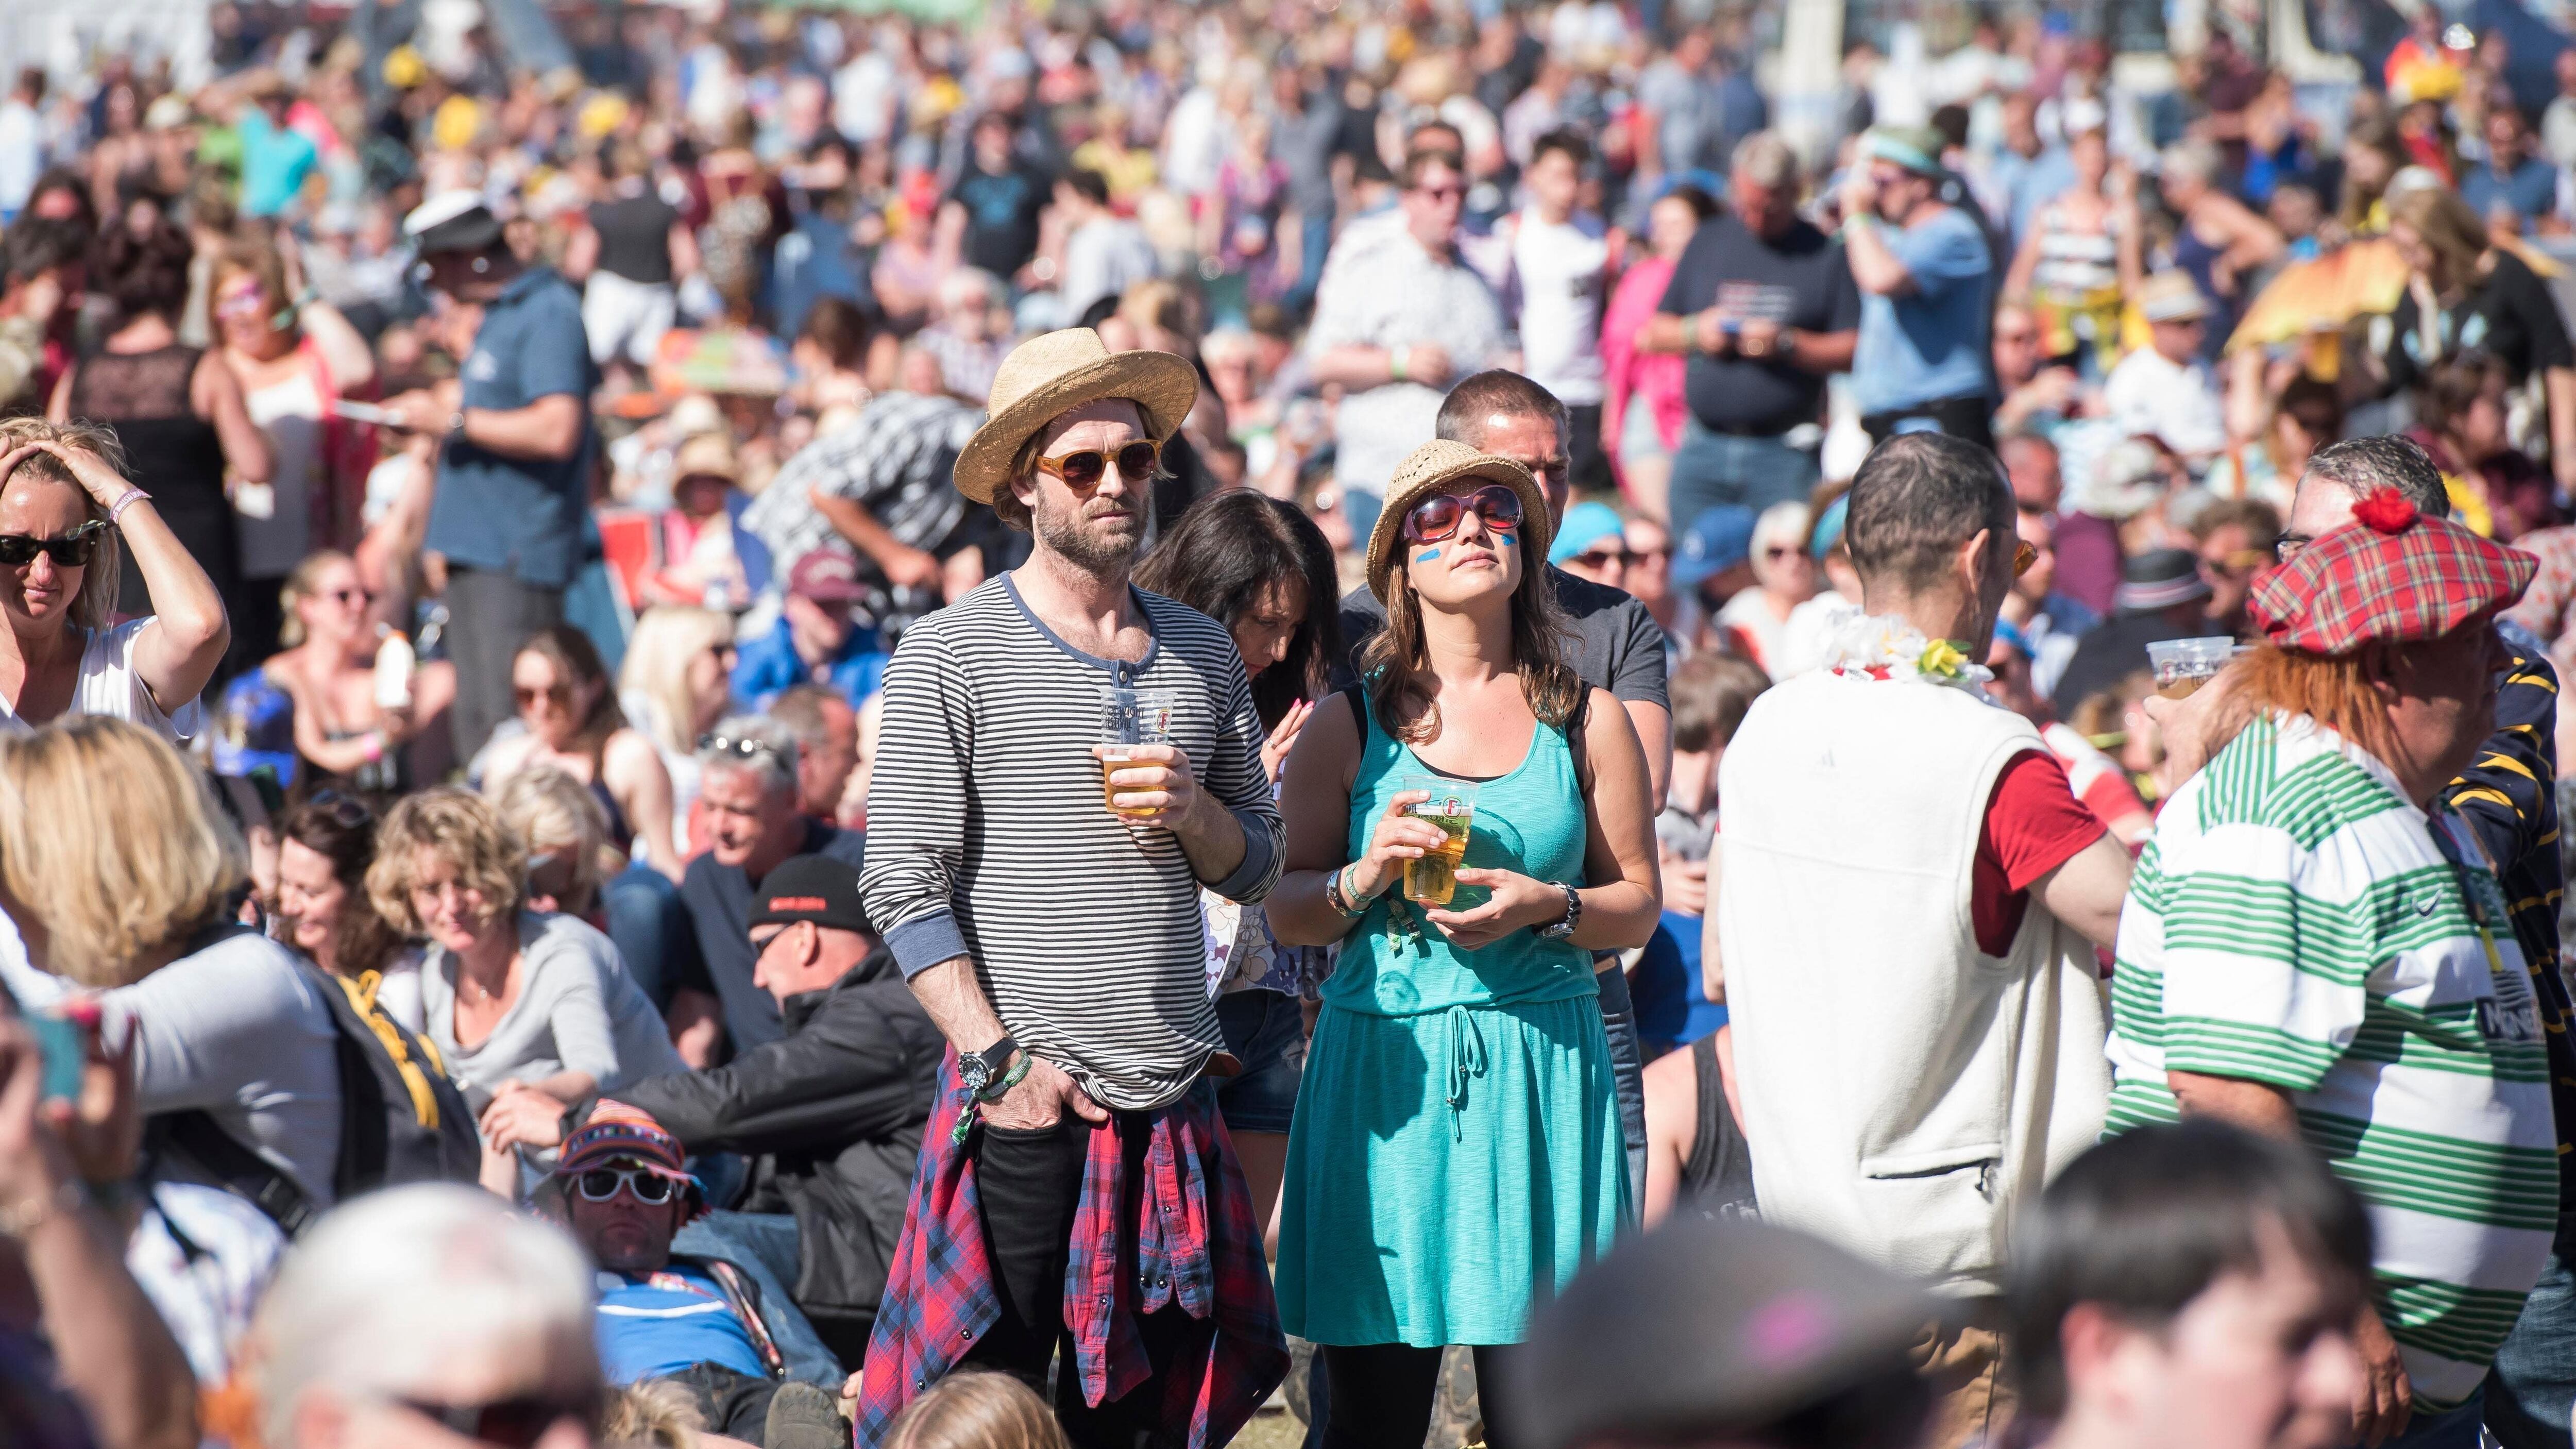 Festival-goers at the Isle of Wight Festival (David Jensen/PA)